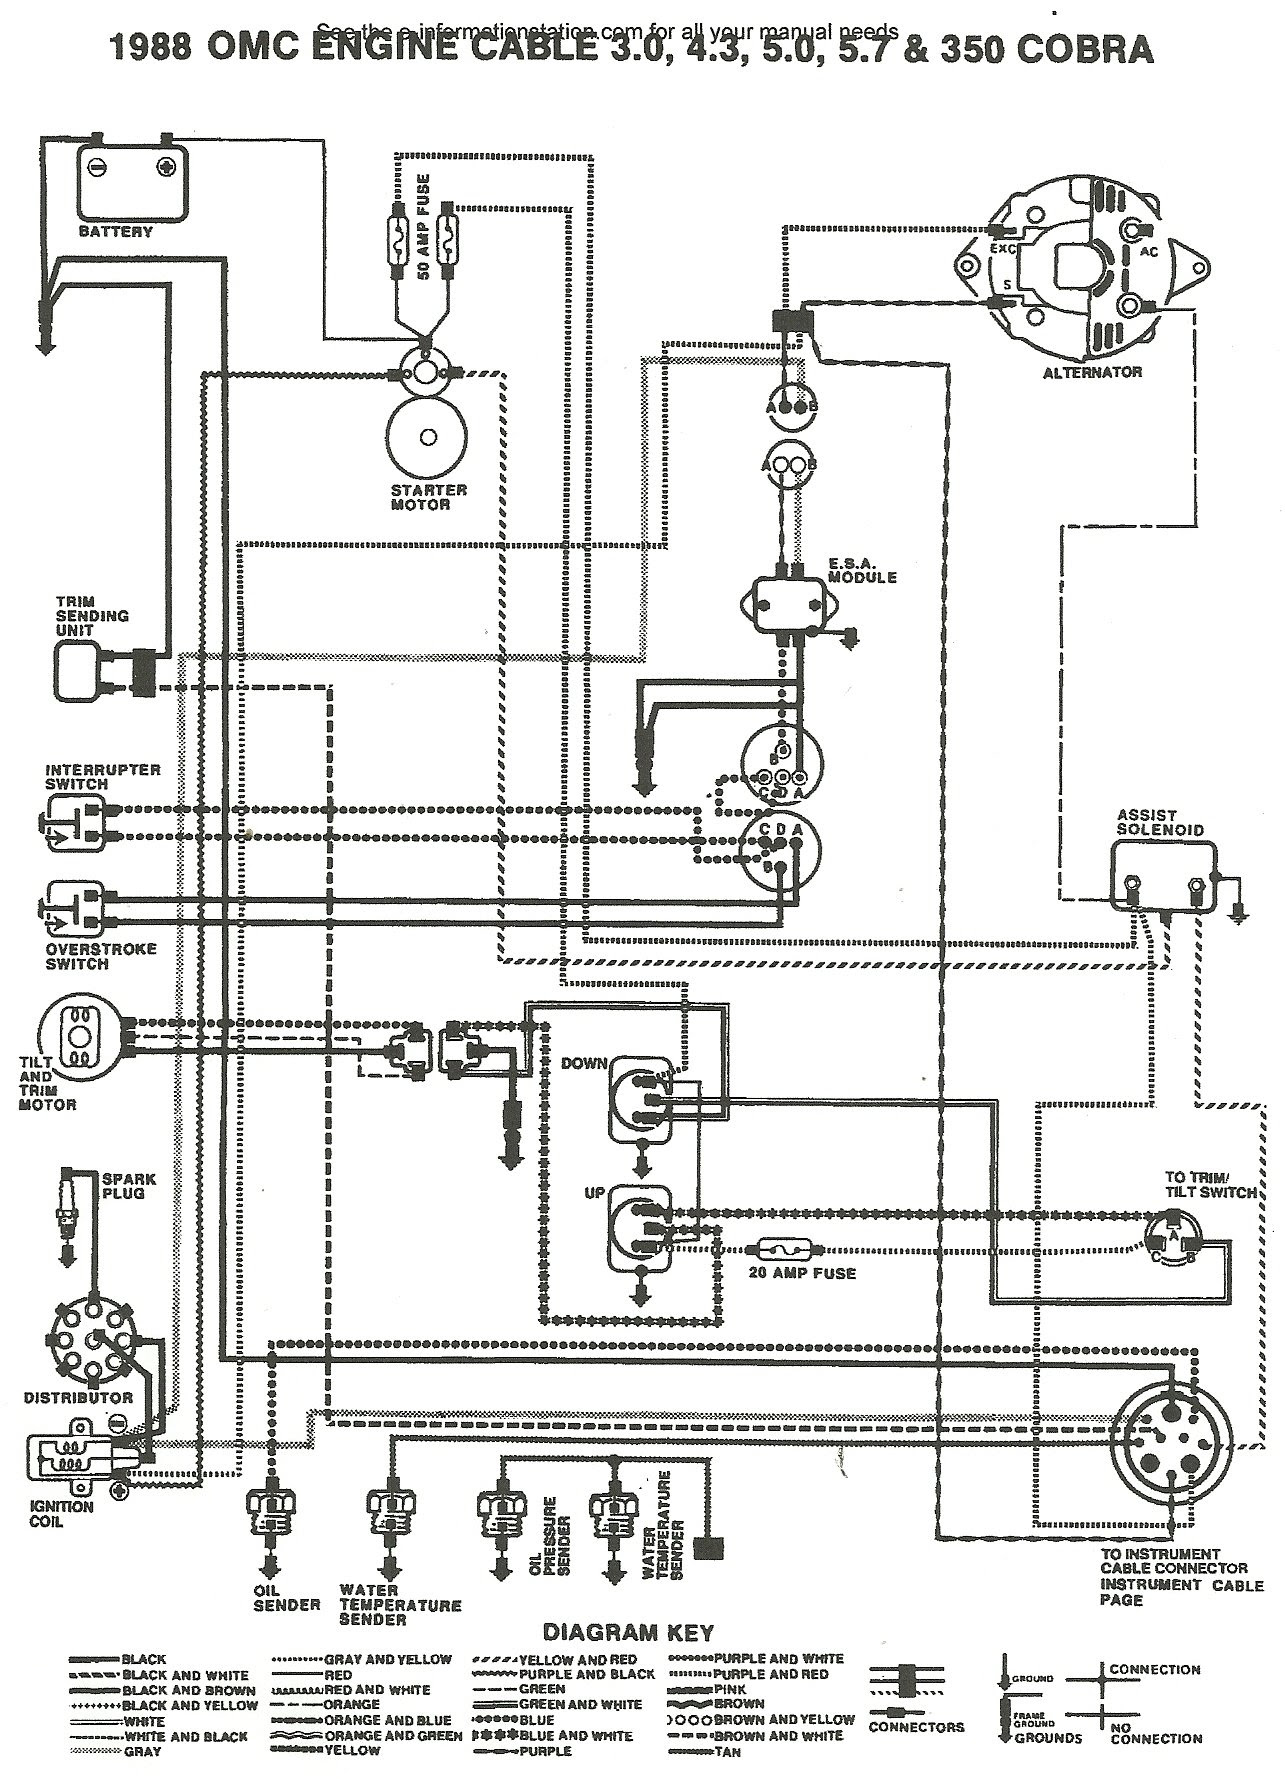 Mercruiser Ignition Switch Wiring Diagram - General Wiring Diagram